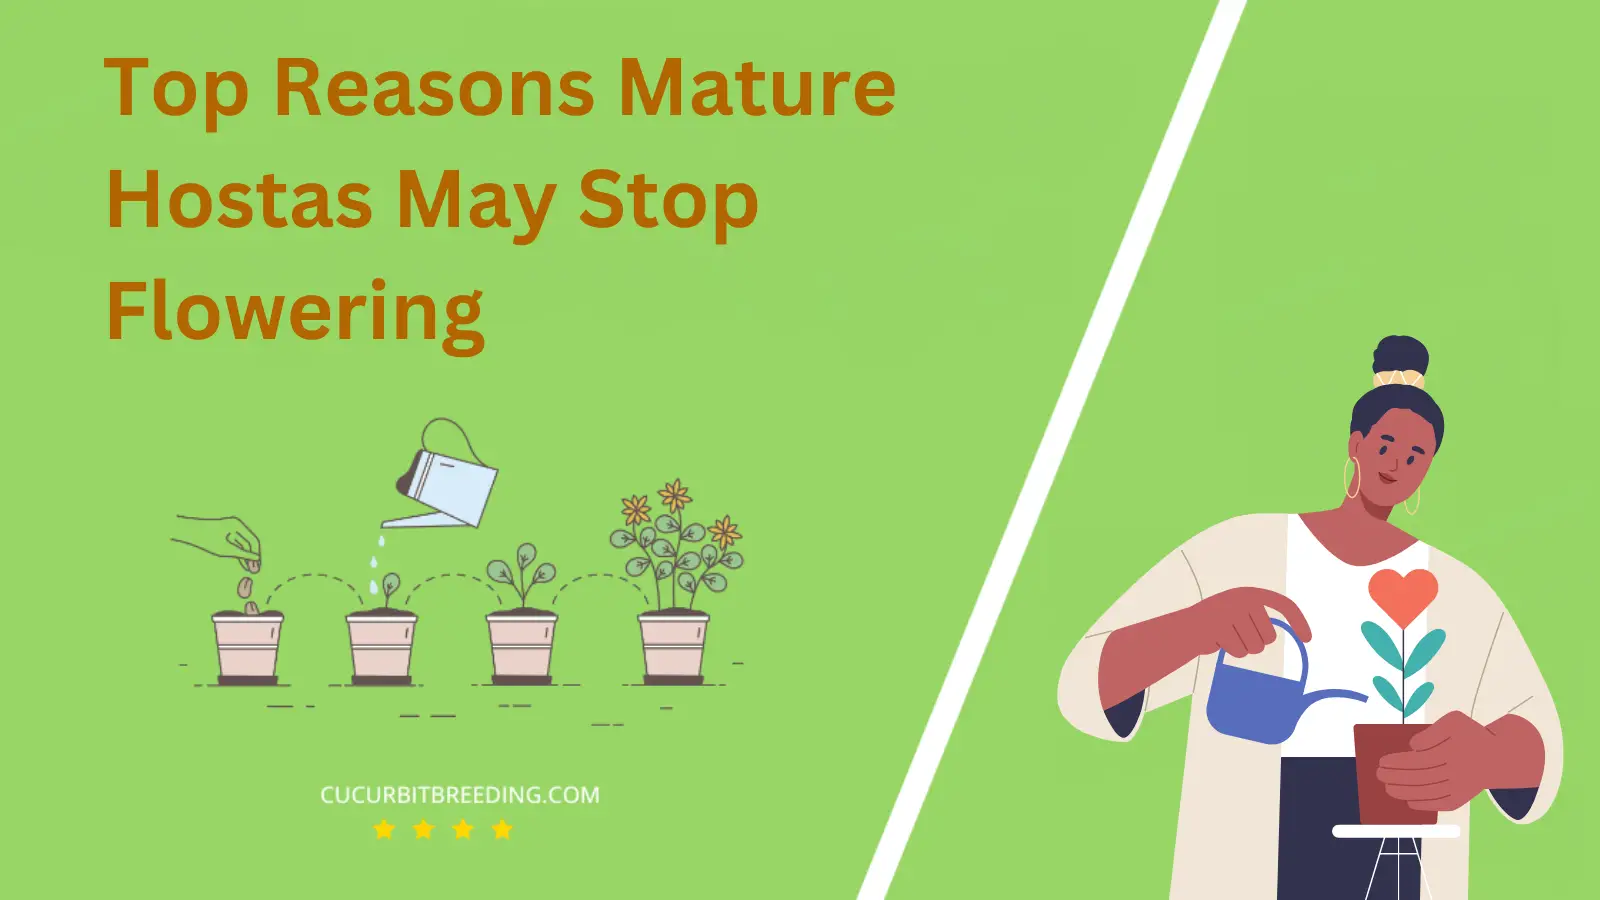 Top Reasons Mature Hostas May Stop Flowering